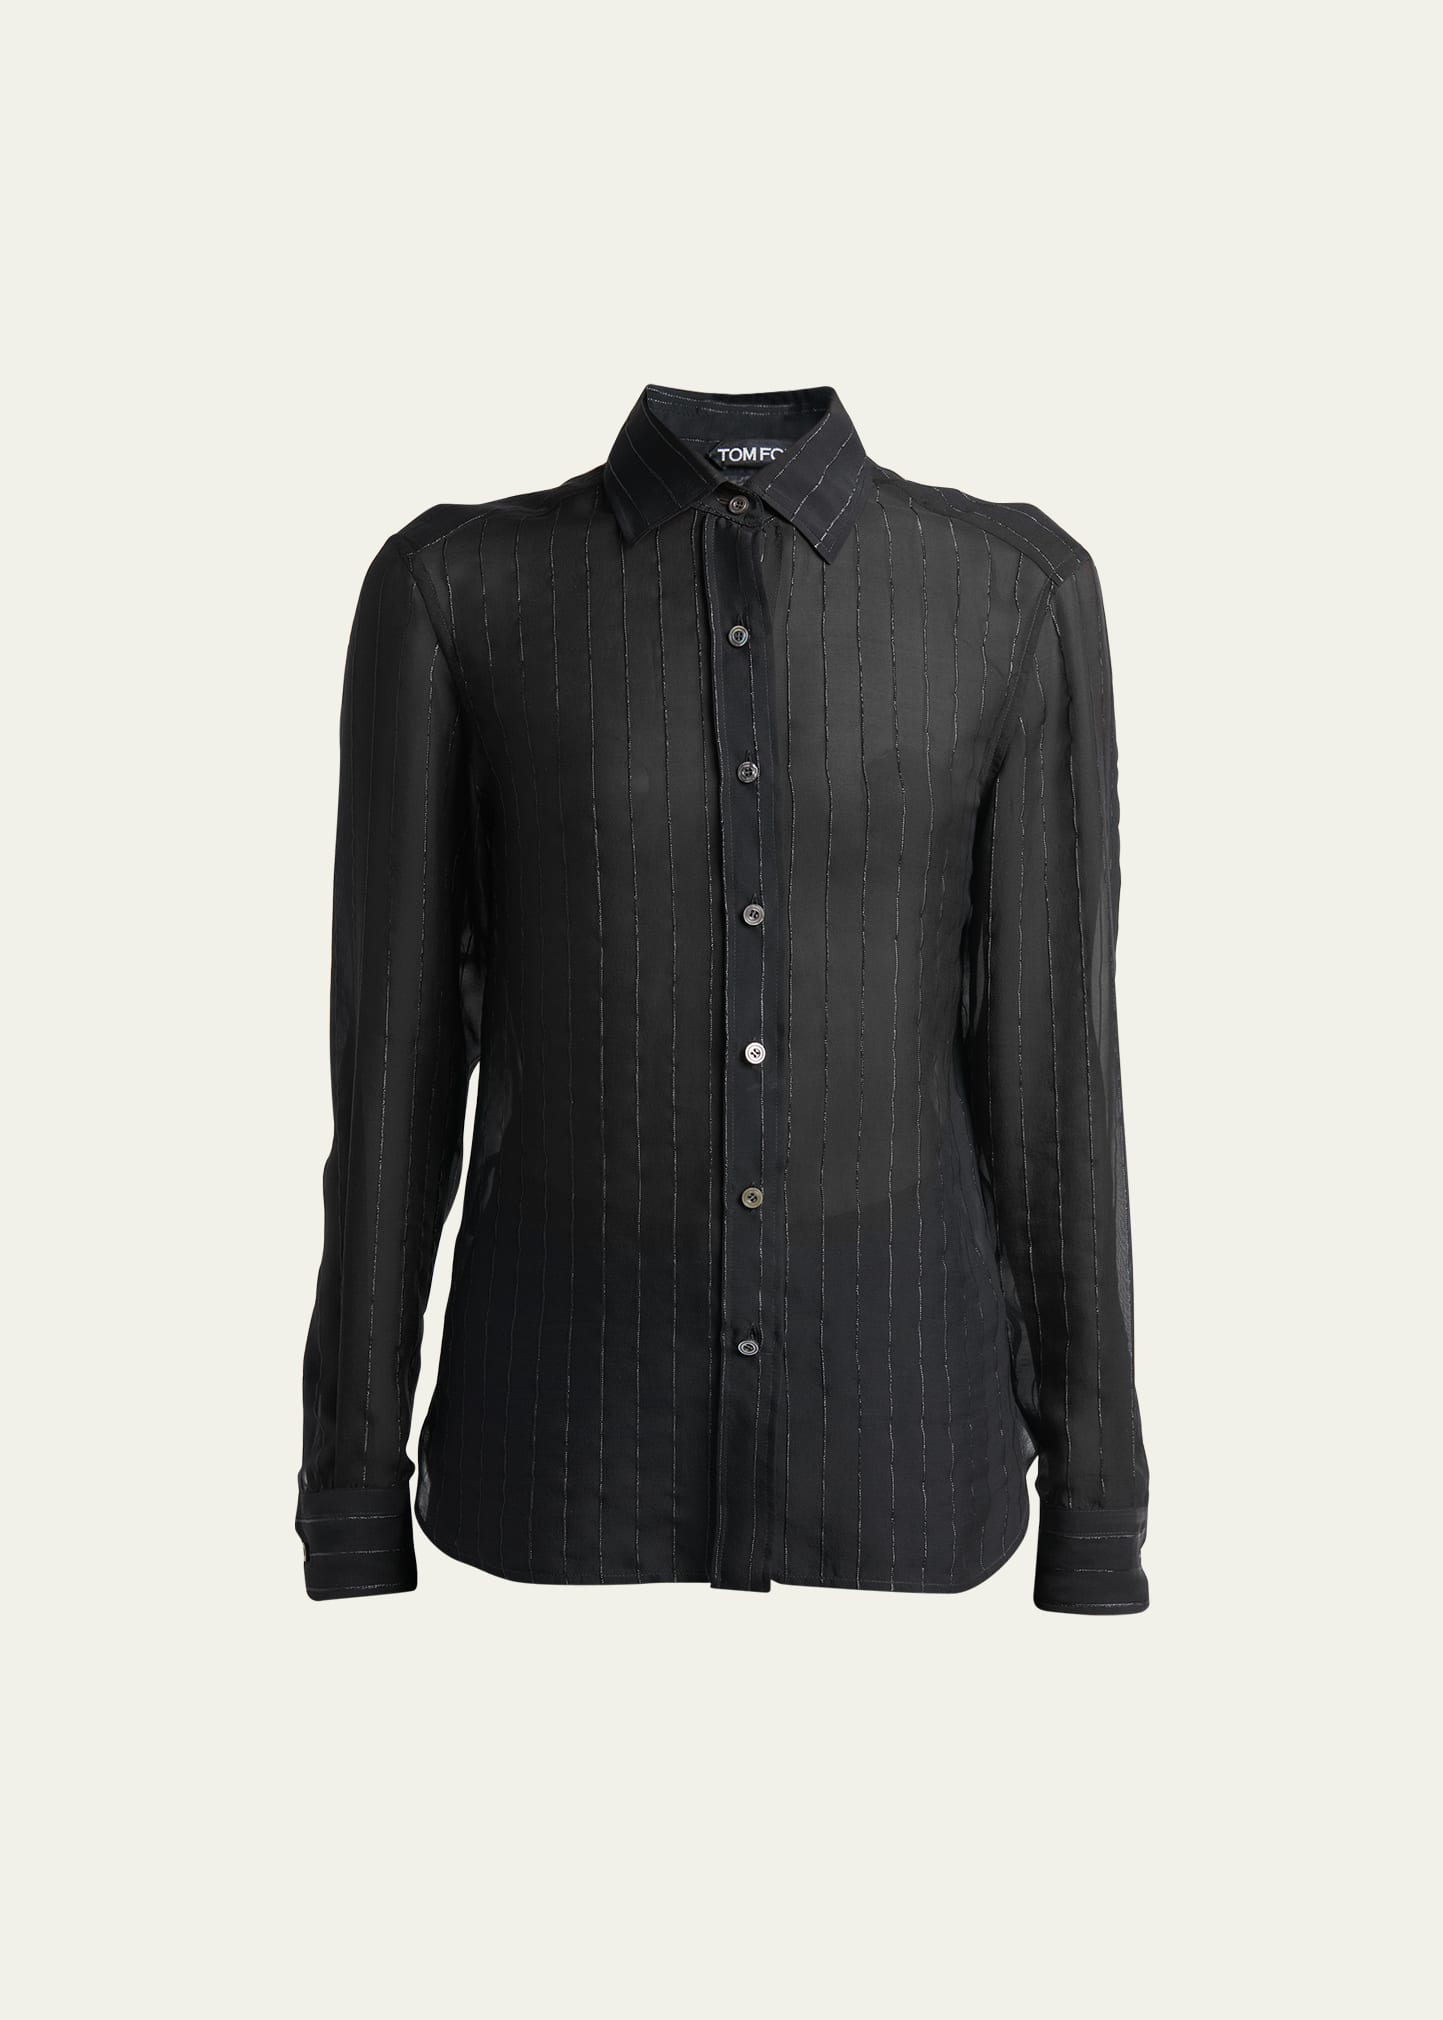 Tom Ford Metallic Pinstripe Sheer Button Up Blouse In Black